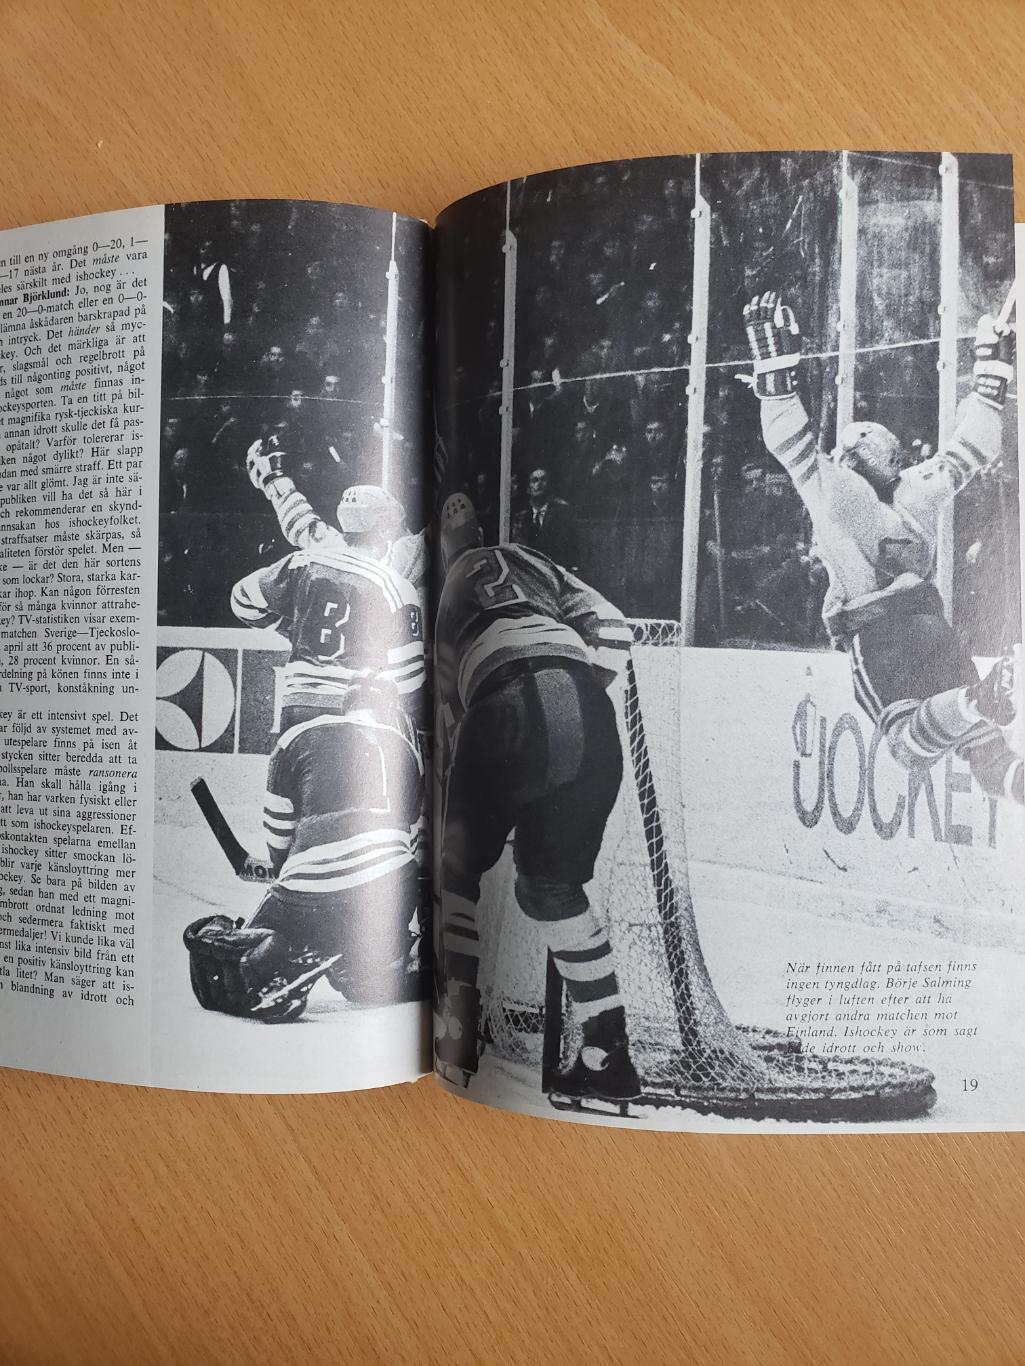 Хоккей. Книга Спорт года 73/74 2